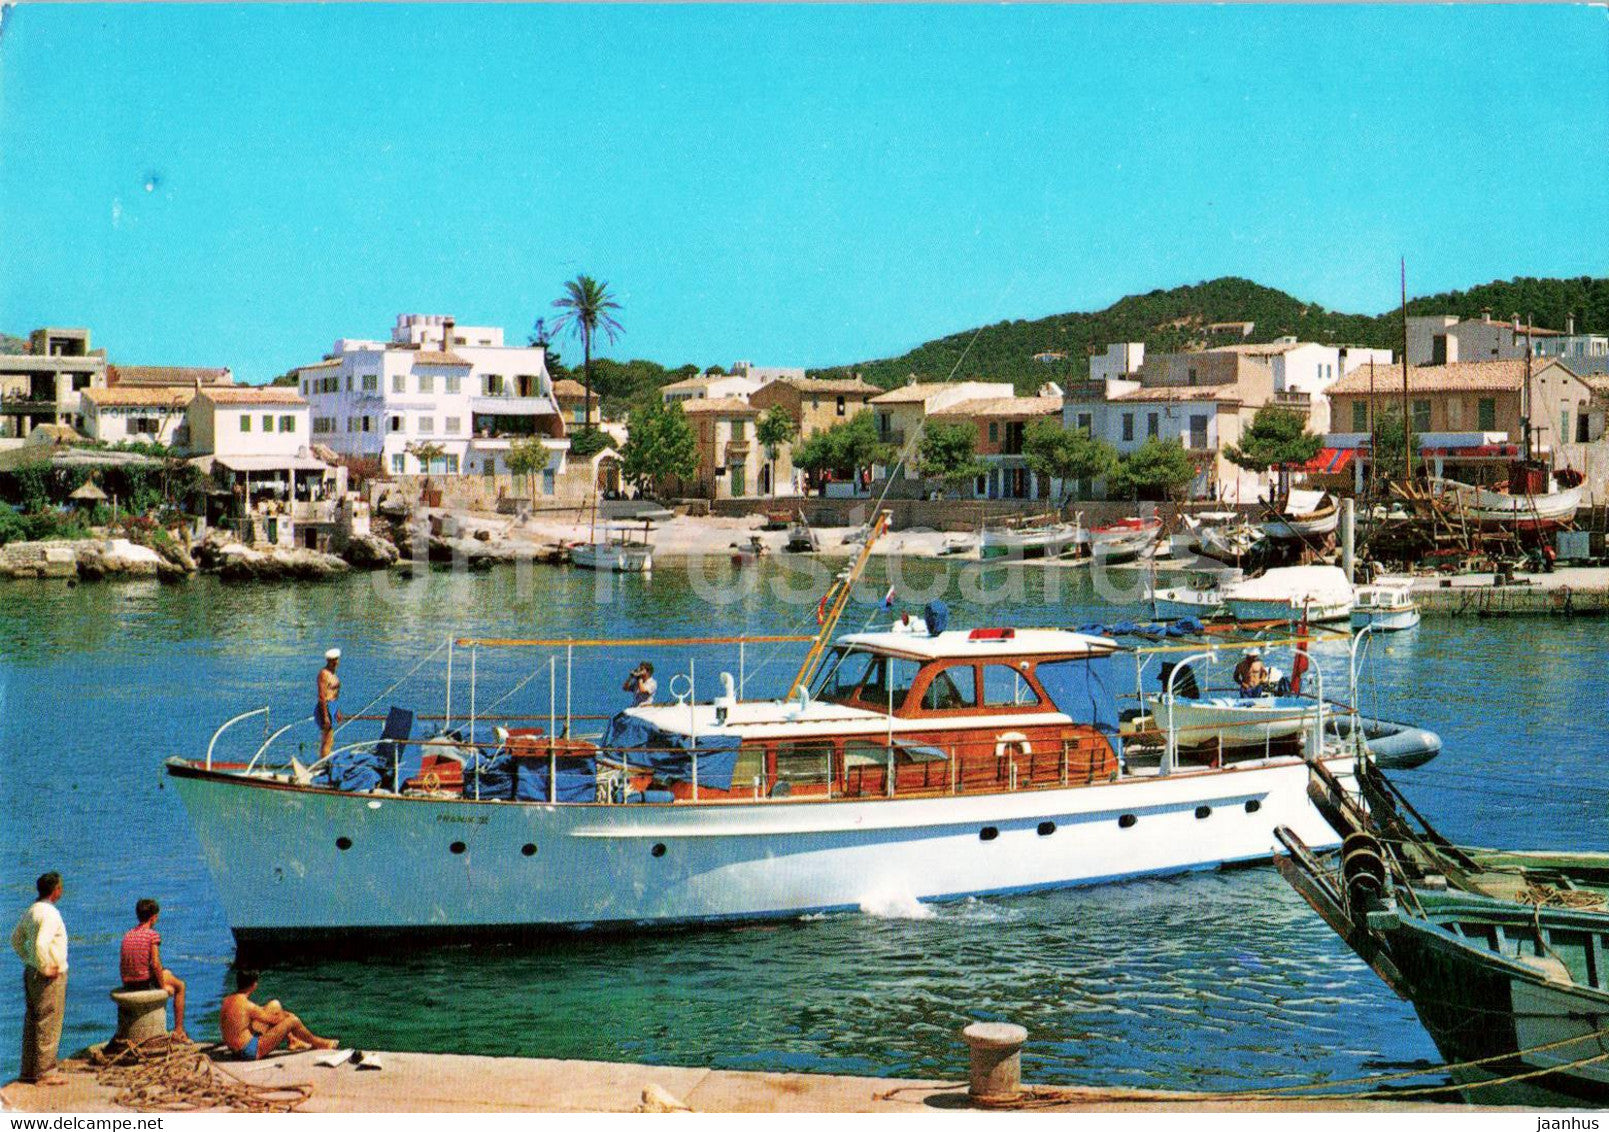 Mallorca - Cala Ratjada - Detalle del Puerto - port - ship - boat - 1412 - Spain - unused - JH Postcards